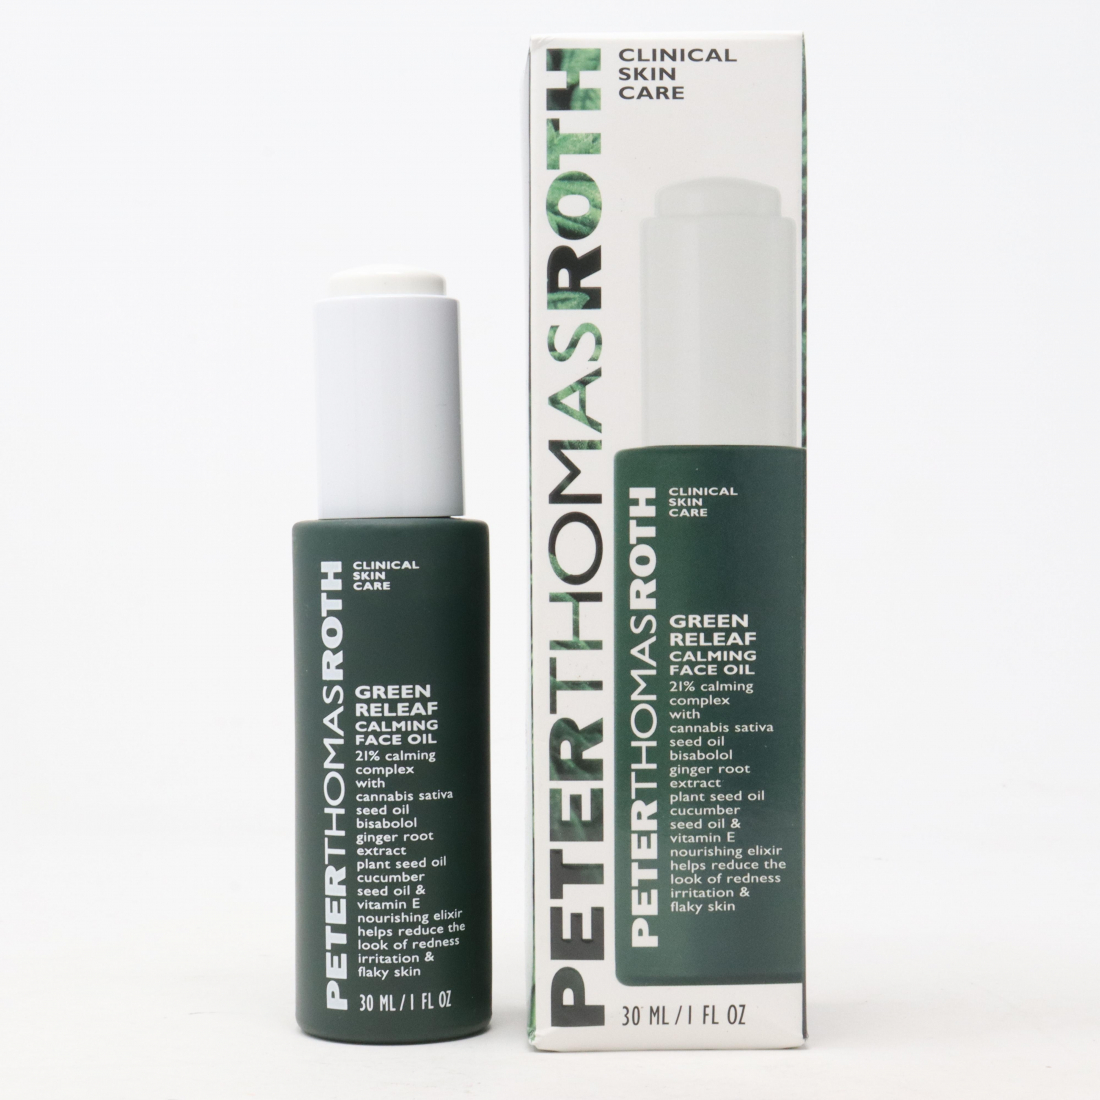 'Green Releaf Calming' Facial Oil - 30 ml